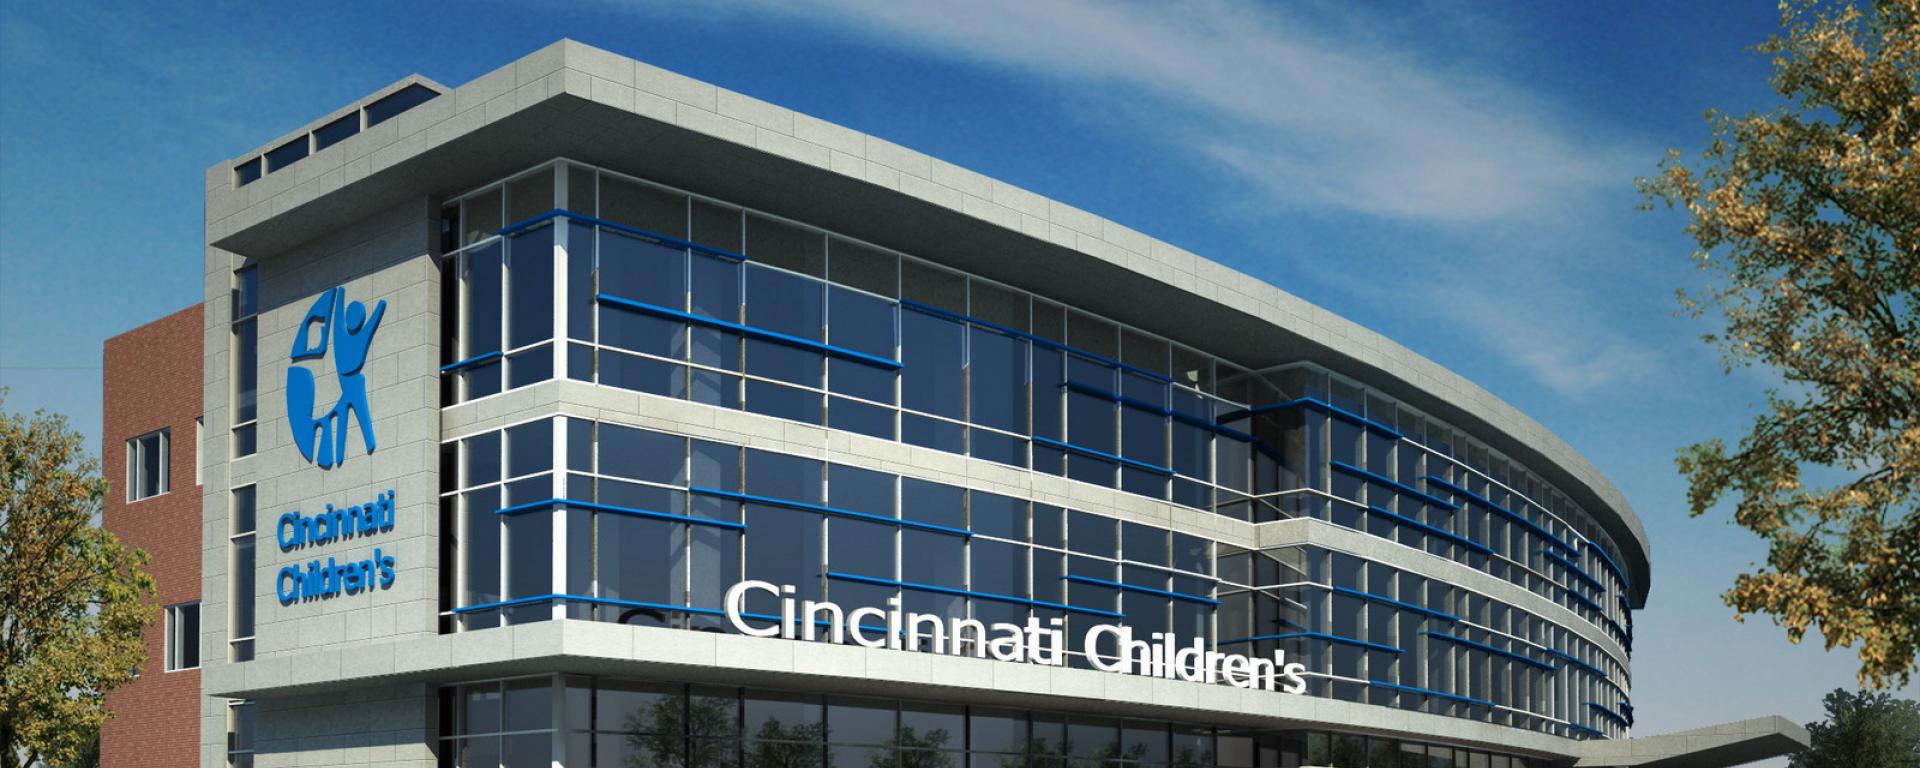 close-up photo of front of Cincinnati Childrens Hospital Medical Center building